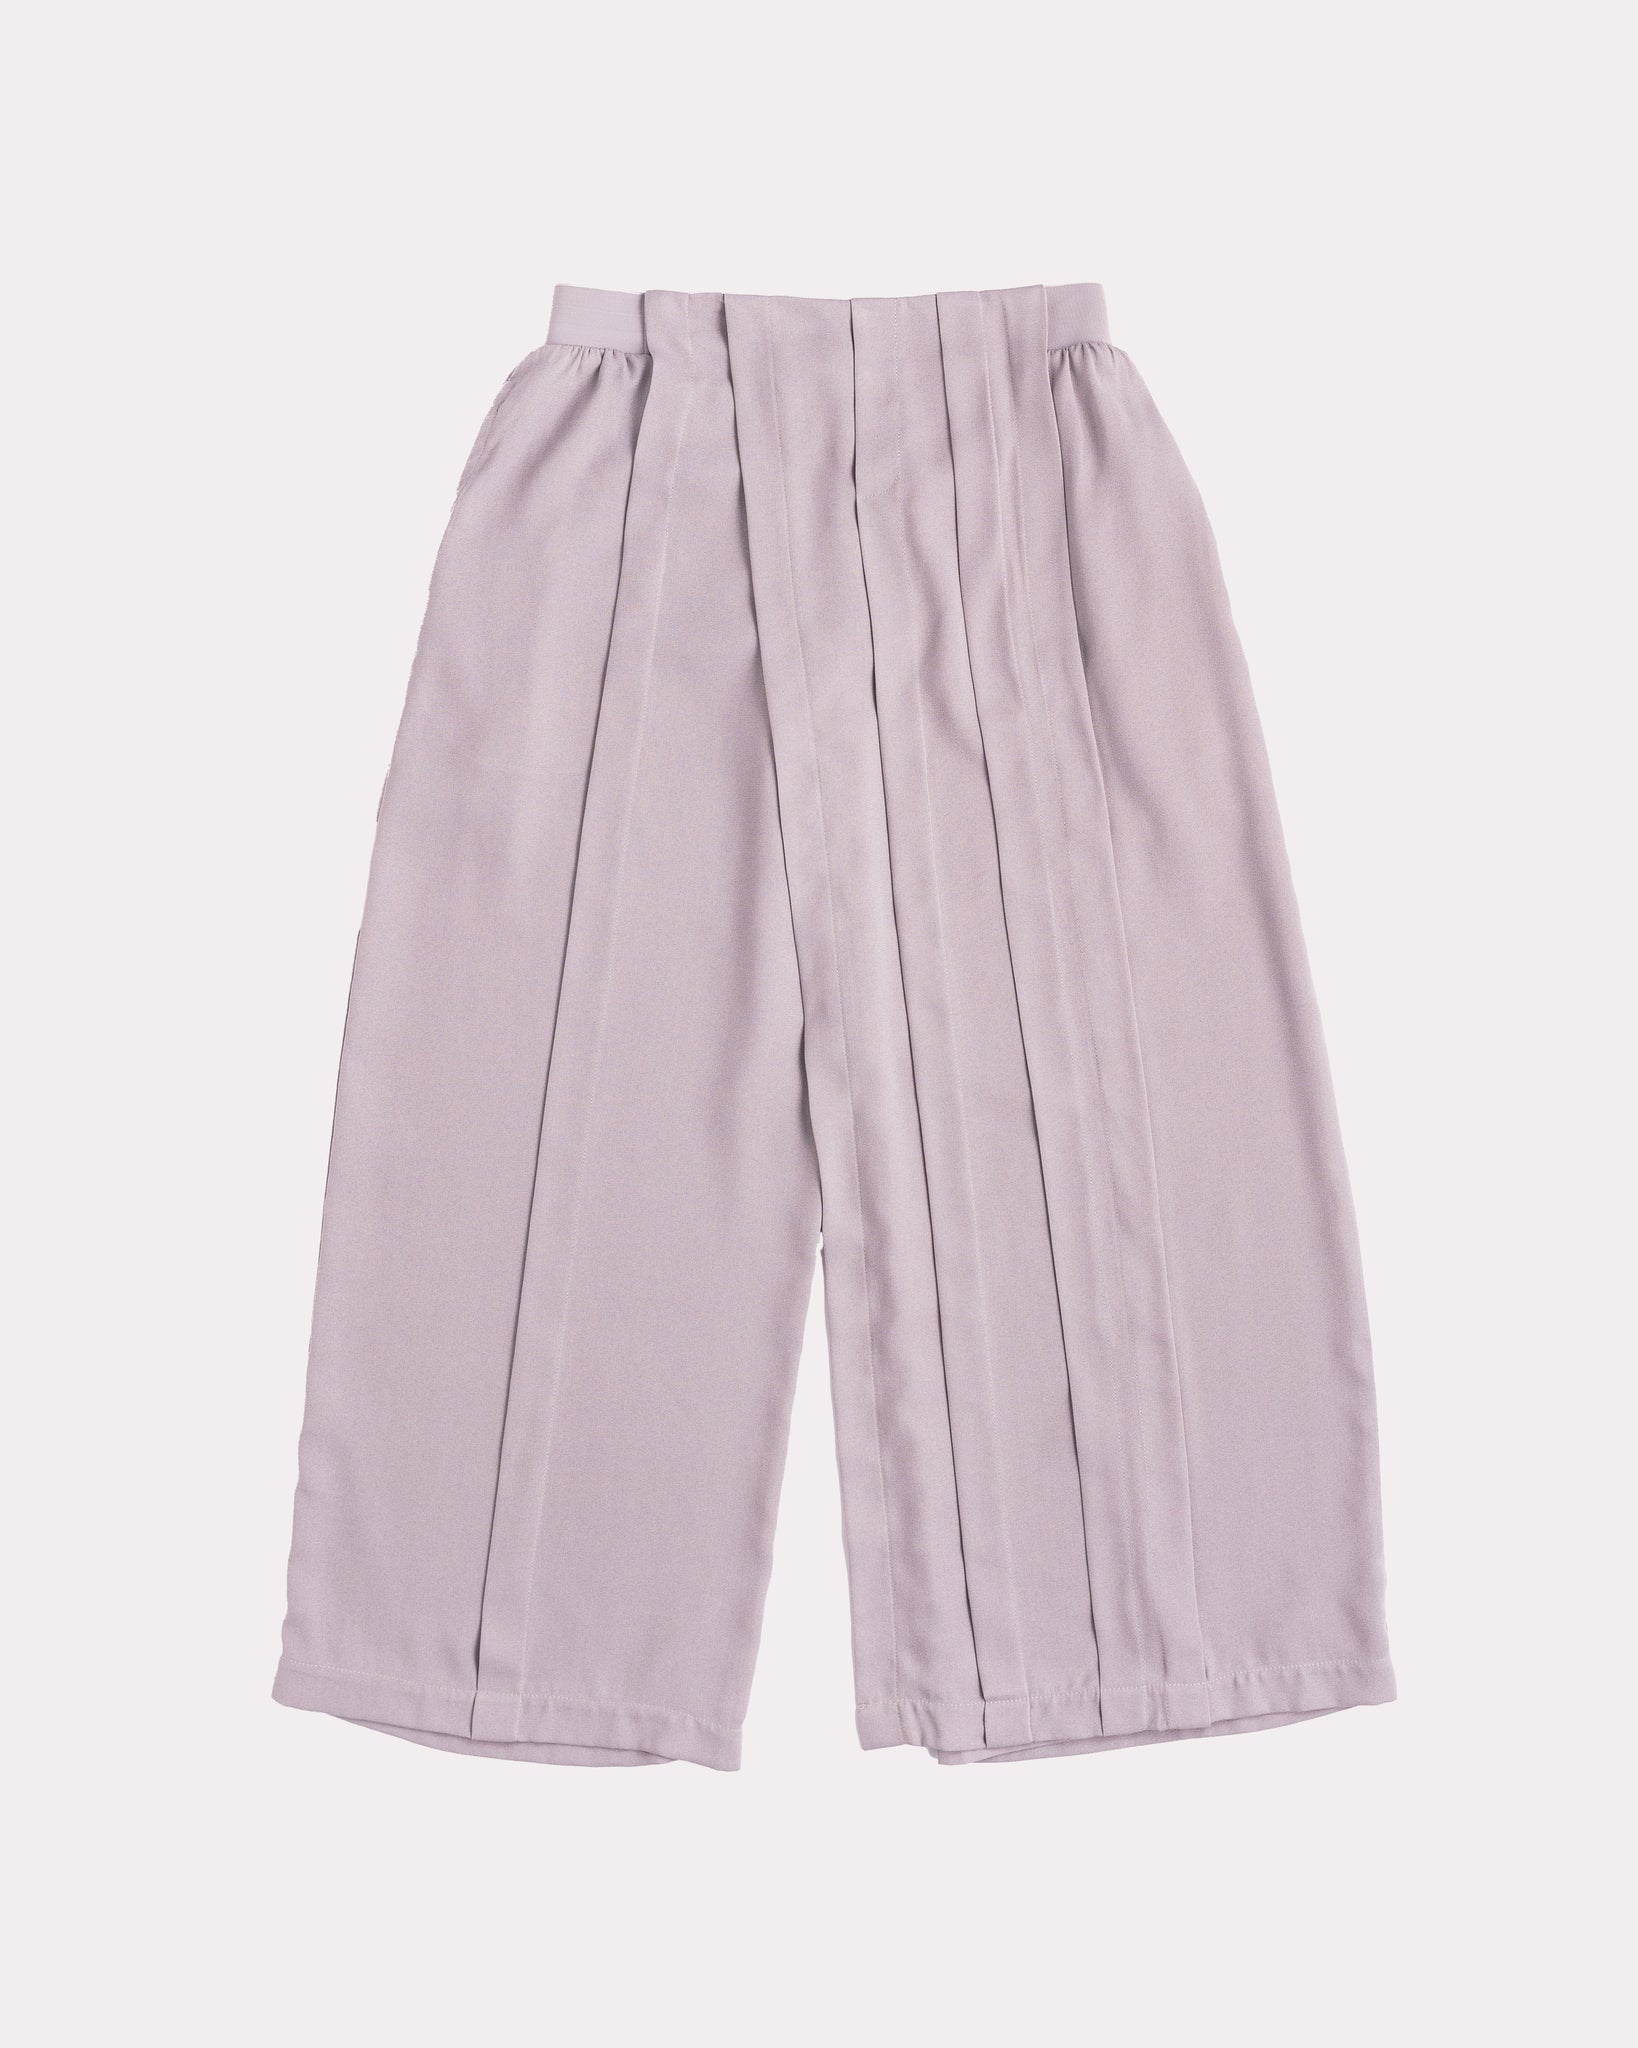 Pleat-Paneled Pants (Grey)